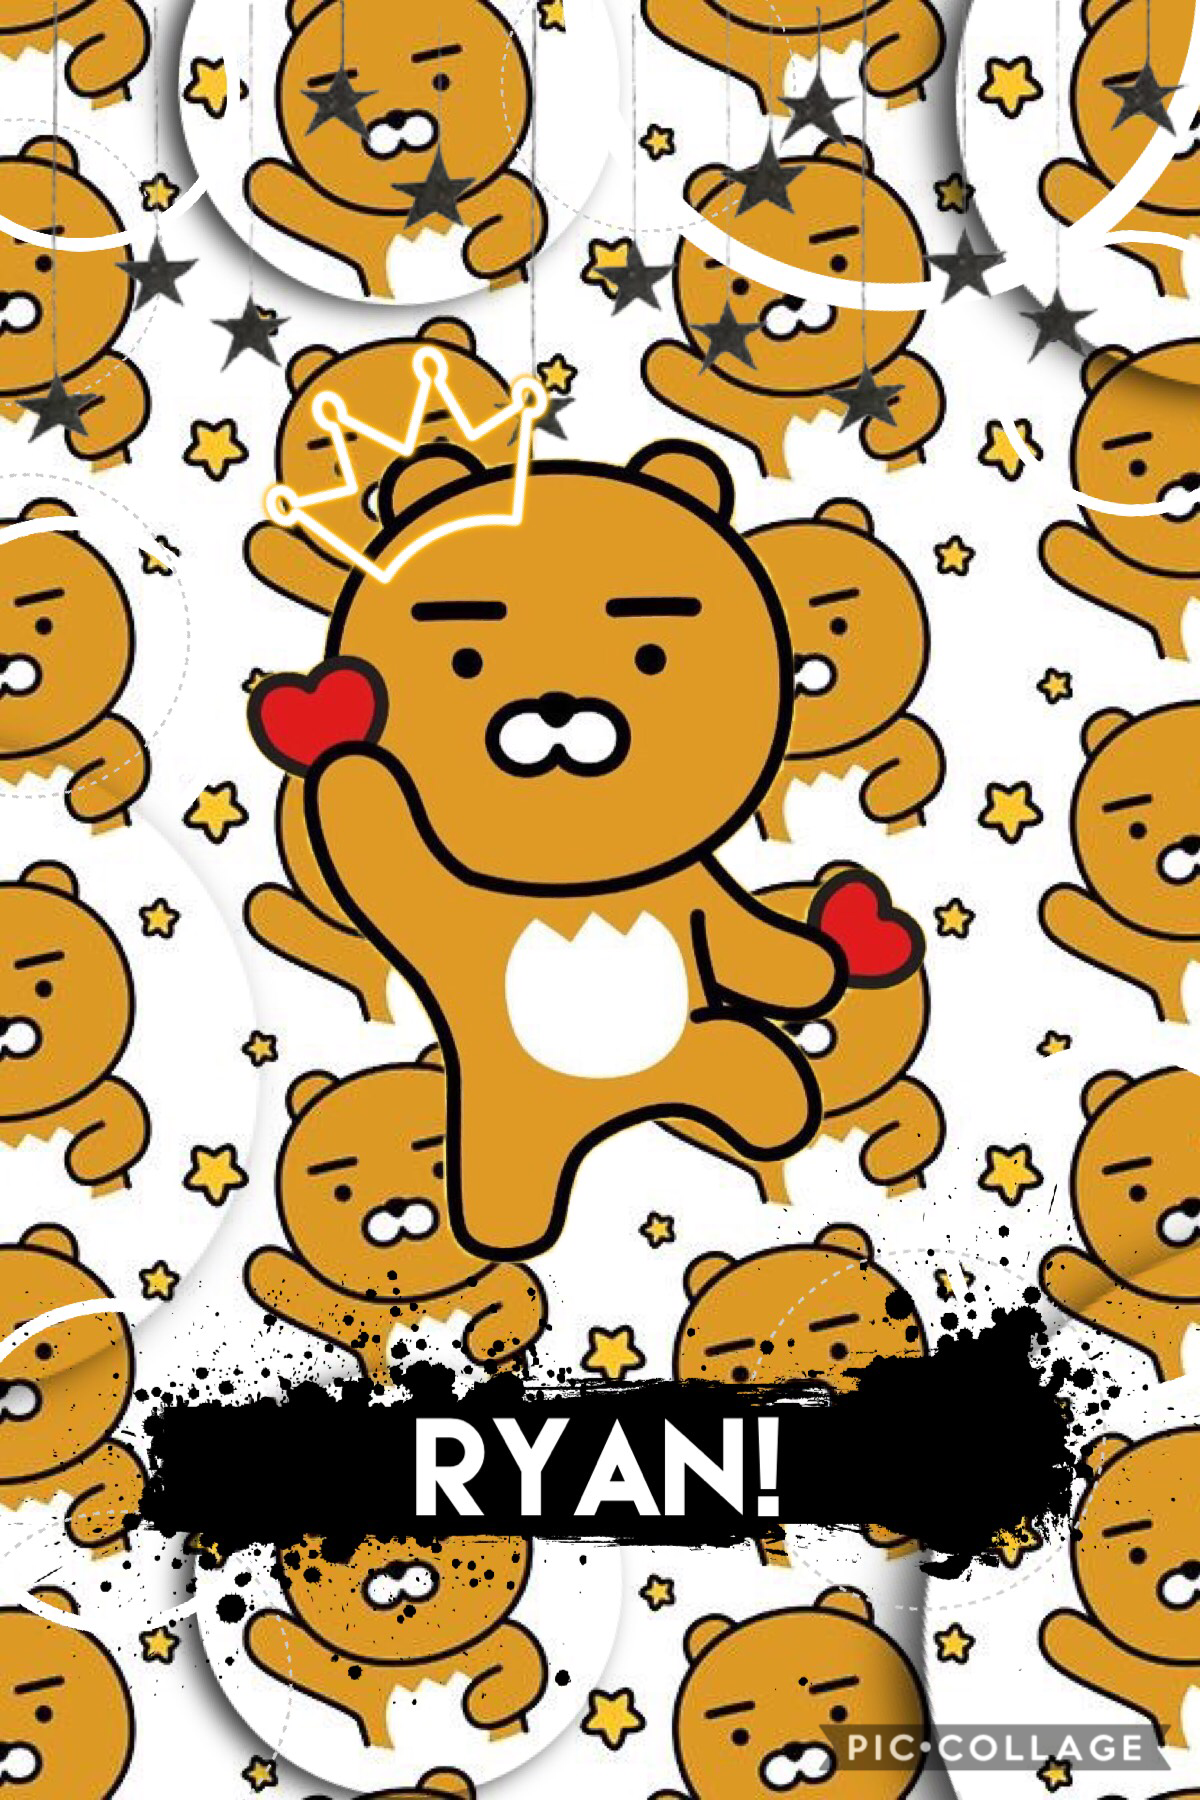 Ryan Loves You All!